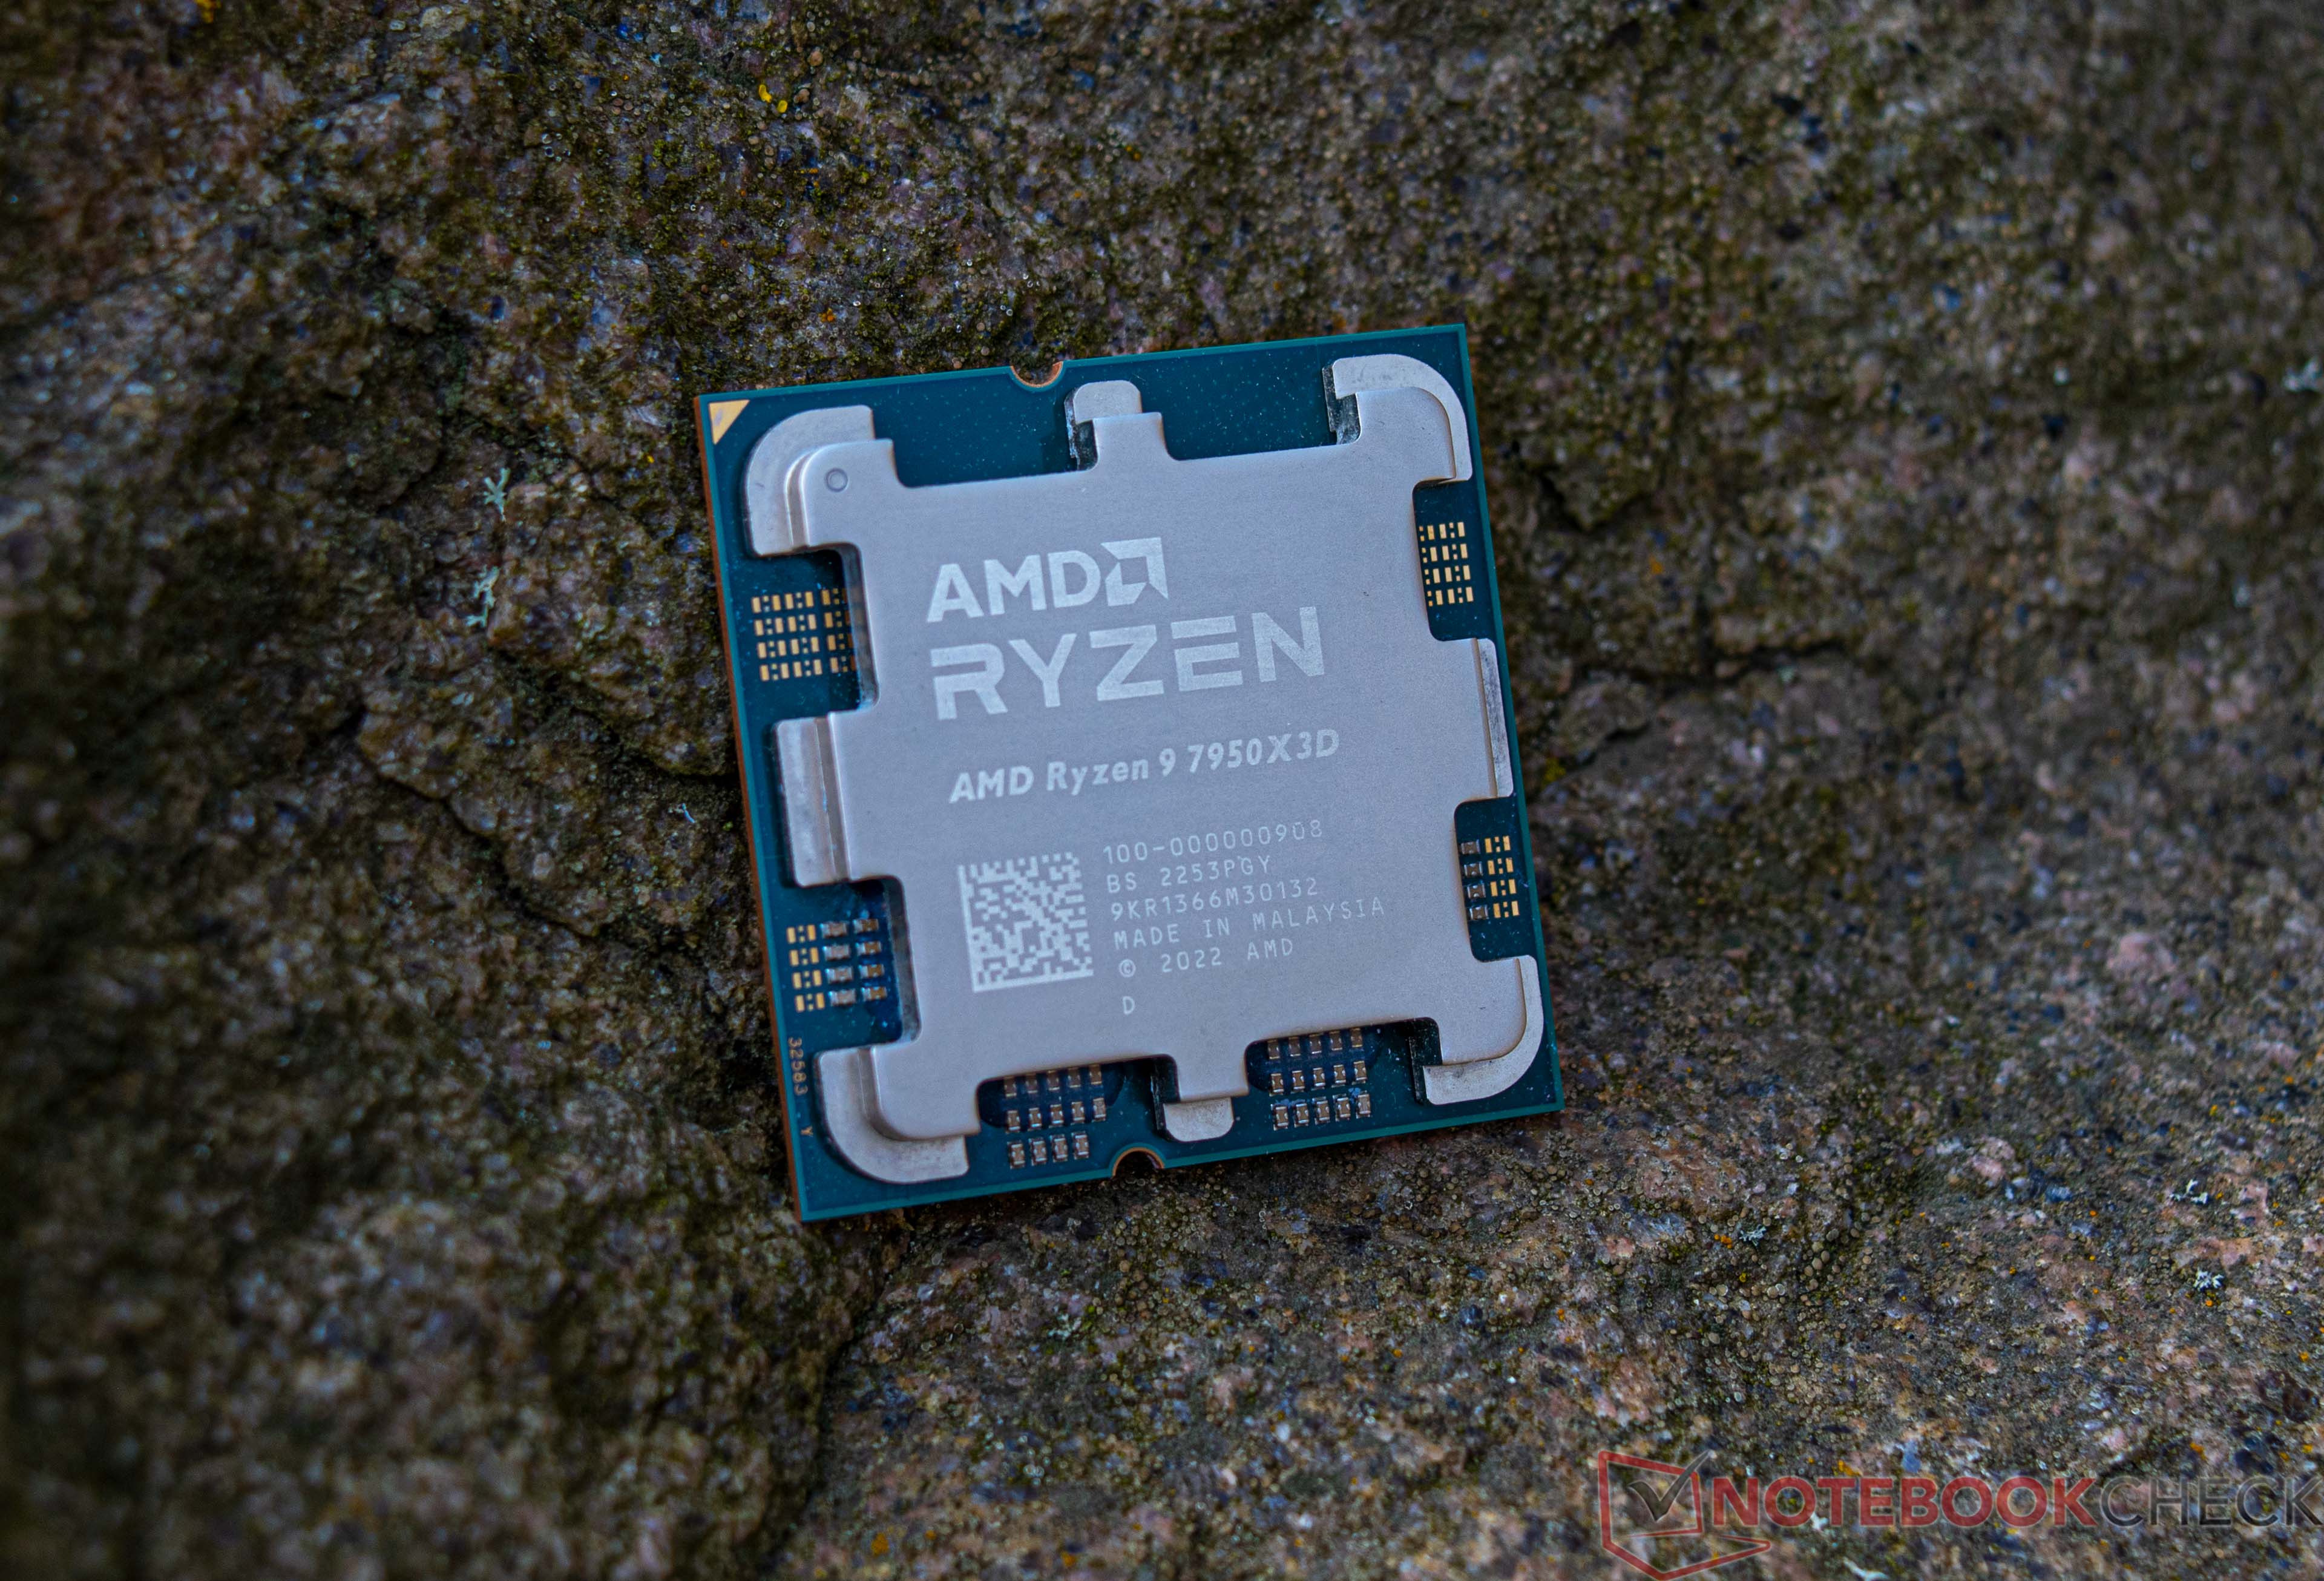 AMD Ryzen 9 7950X3D Processor - Benchmarks and Specs -   Tech